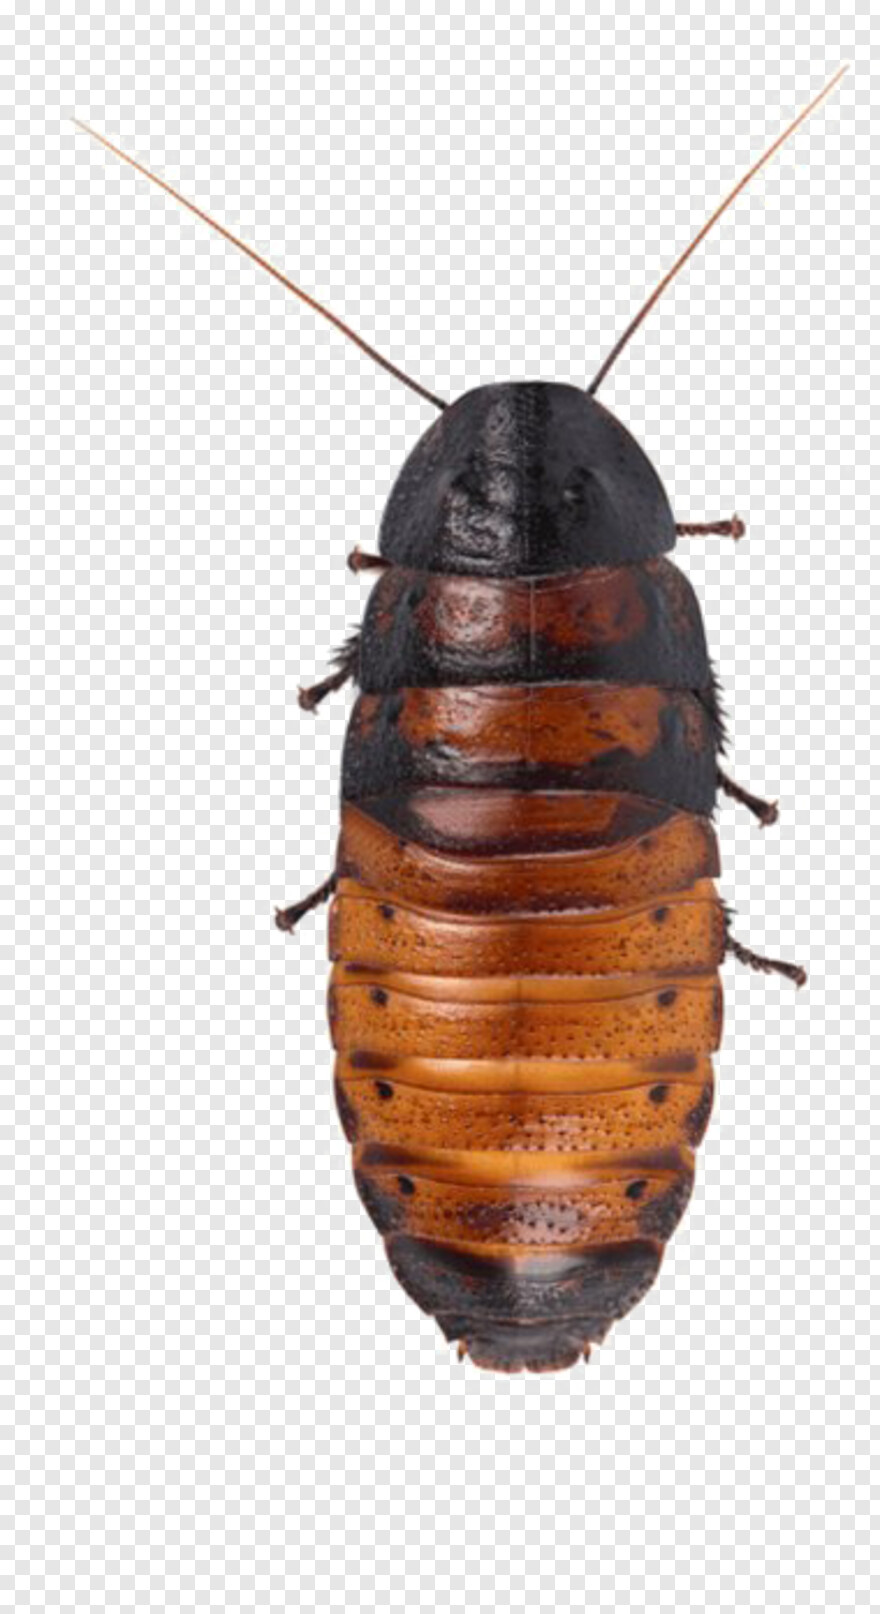 cockroach # 990909